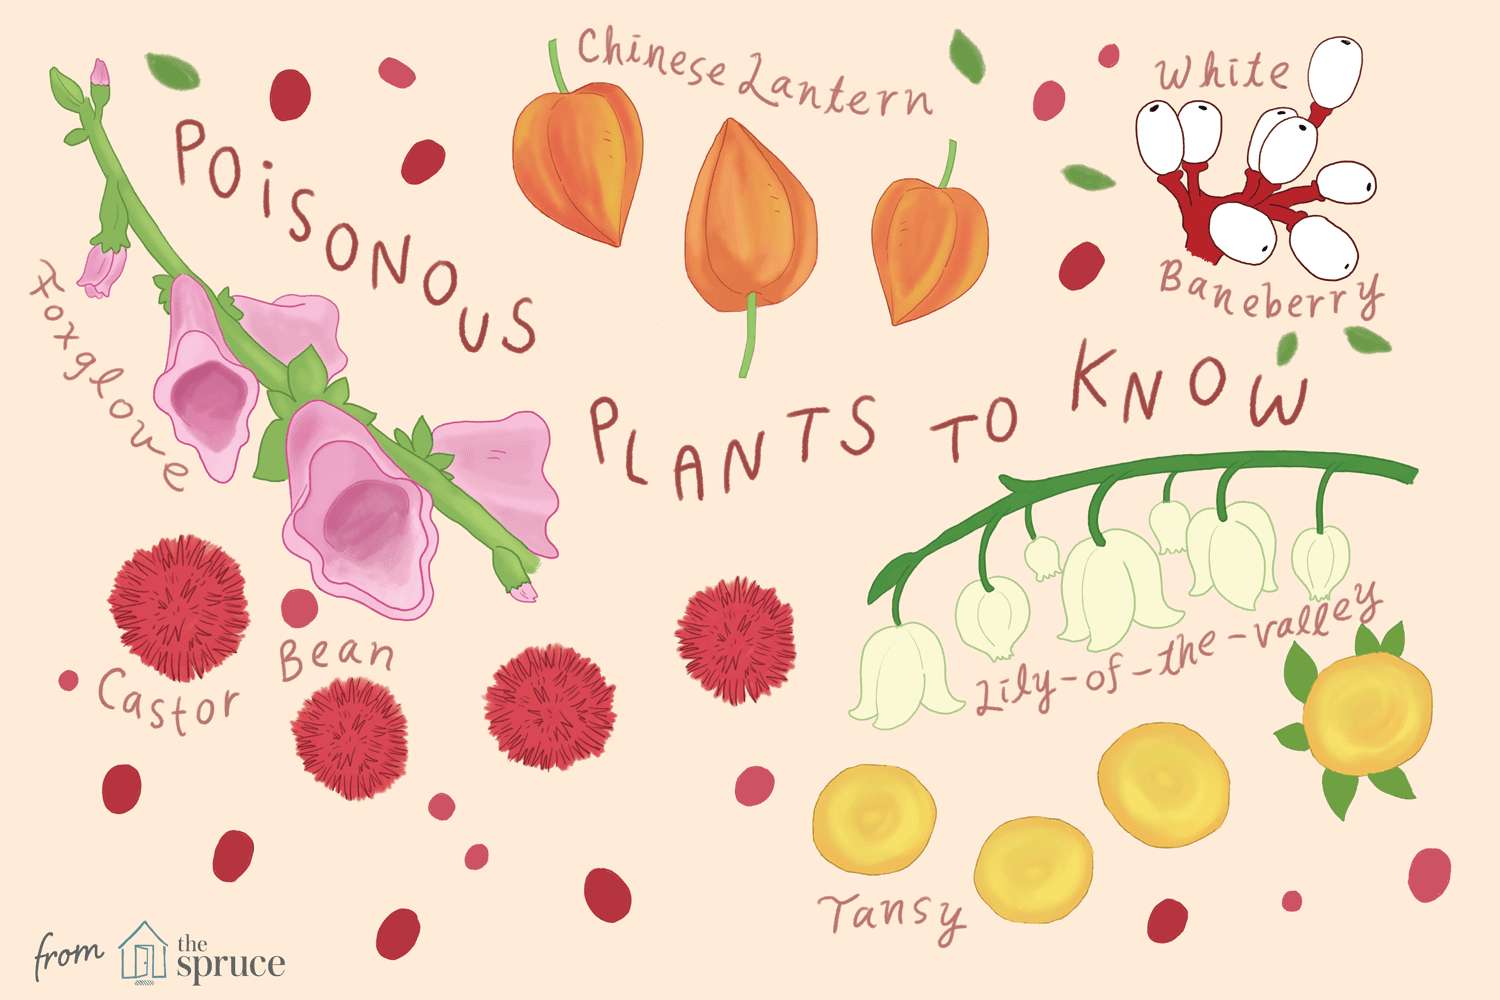 Poisonous Plants puzzle online from photo